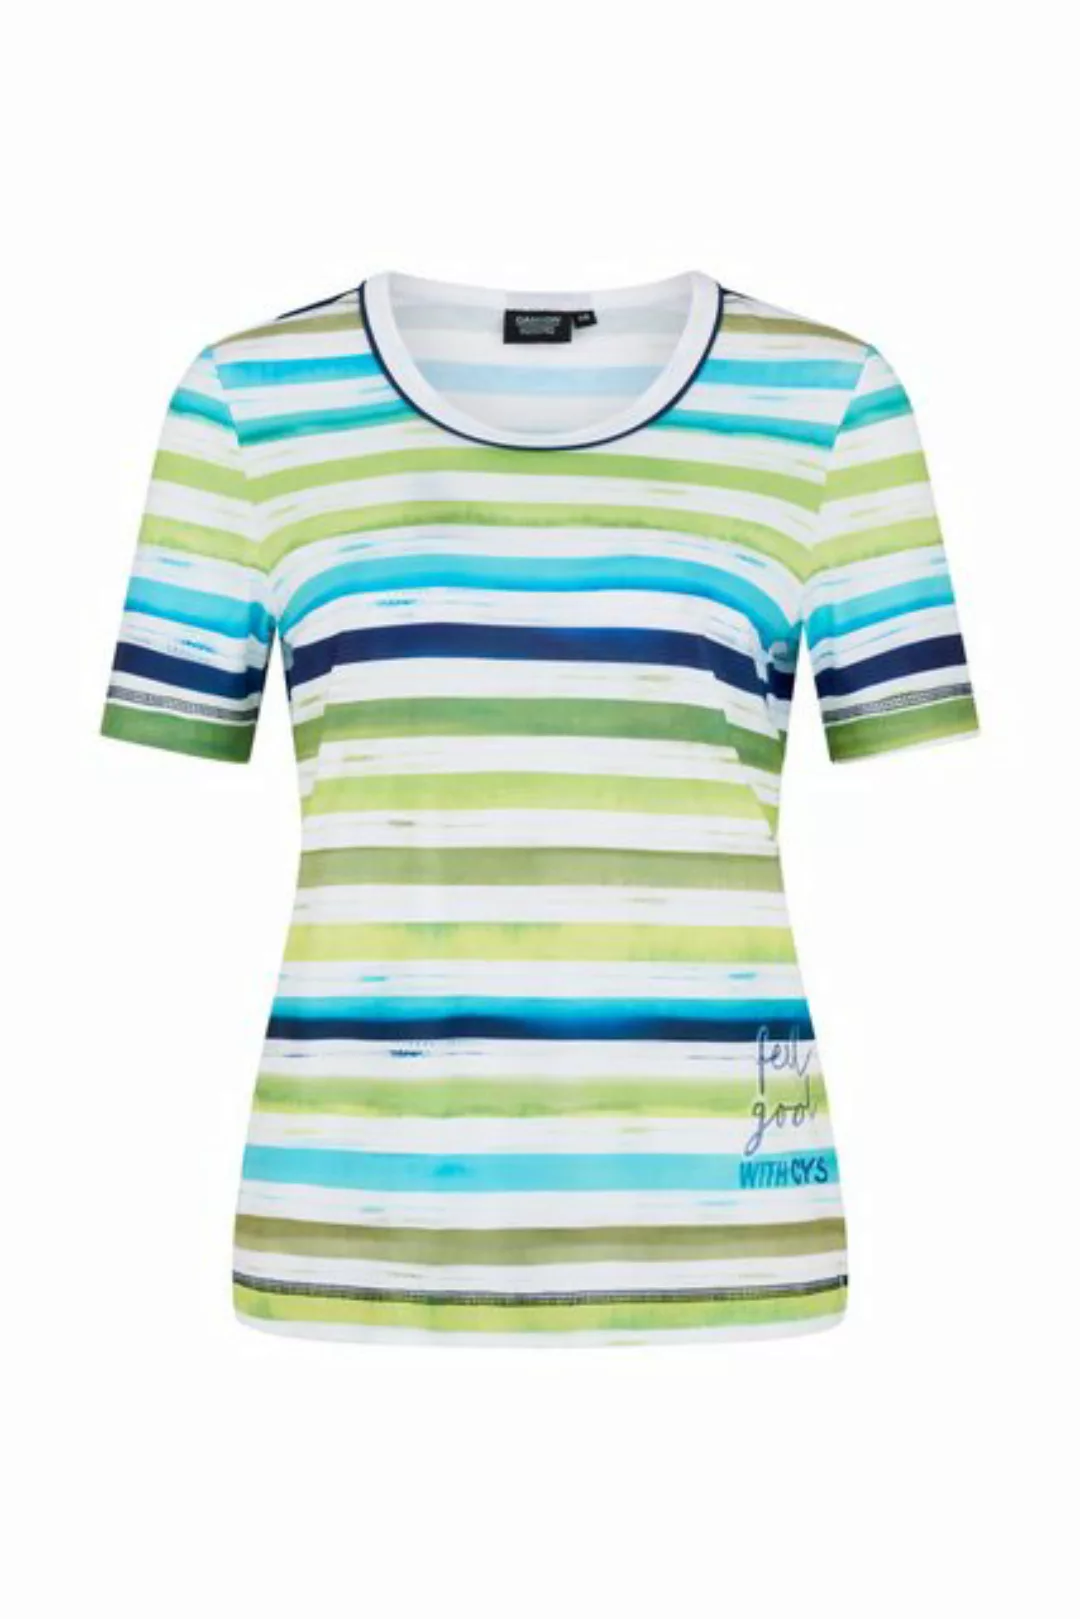 Canyon women sports T-Shirt 597004-12 günstig online kaufen